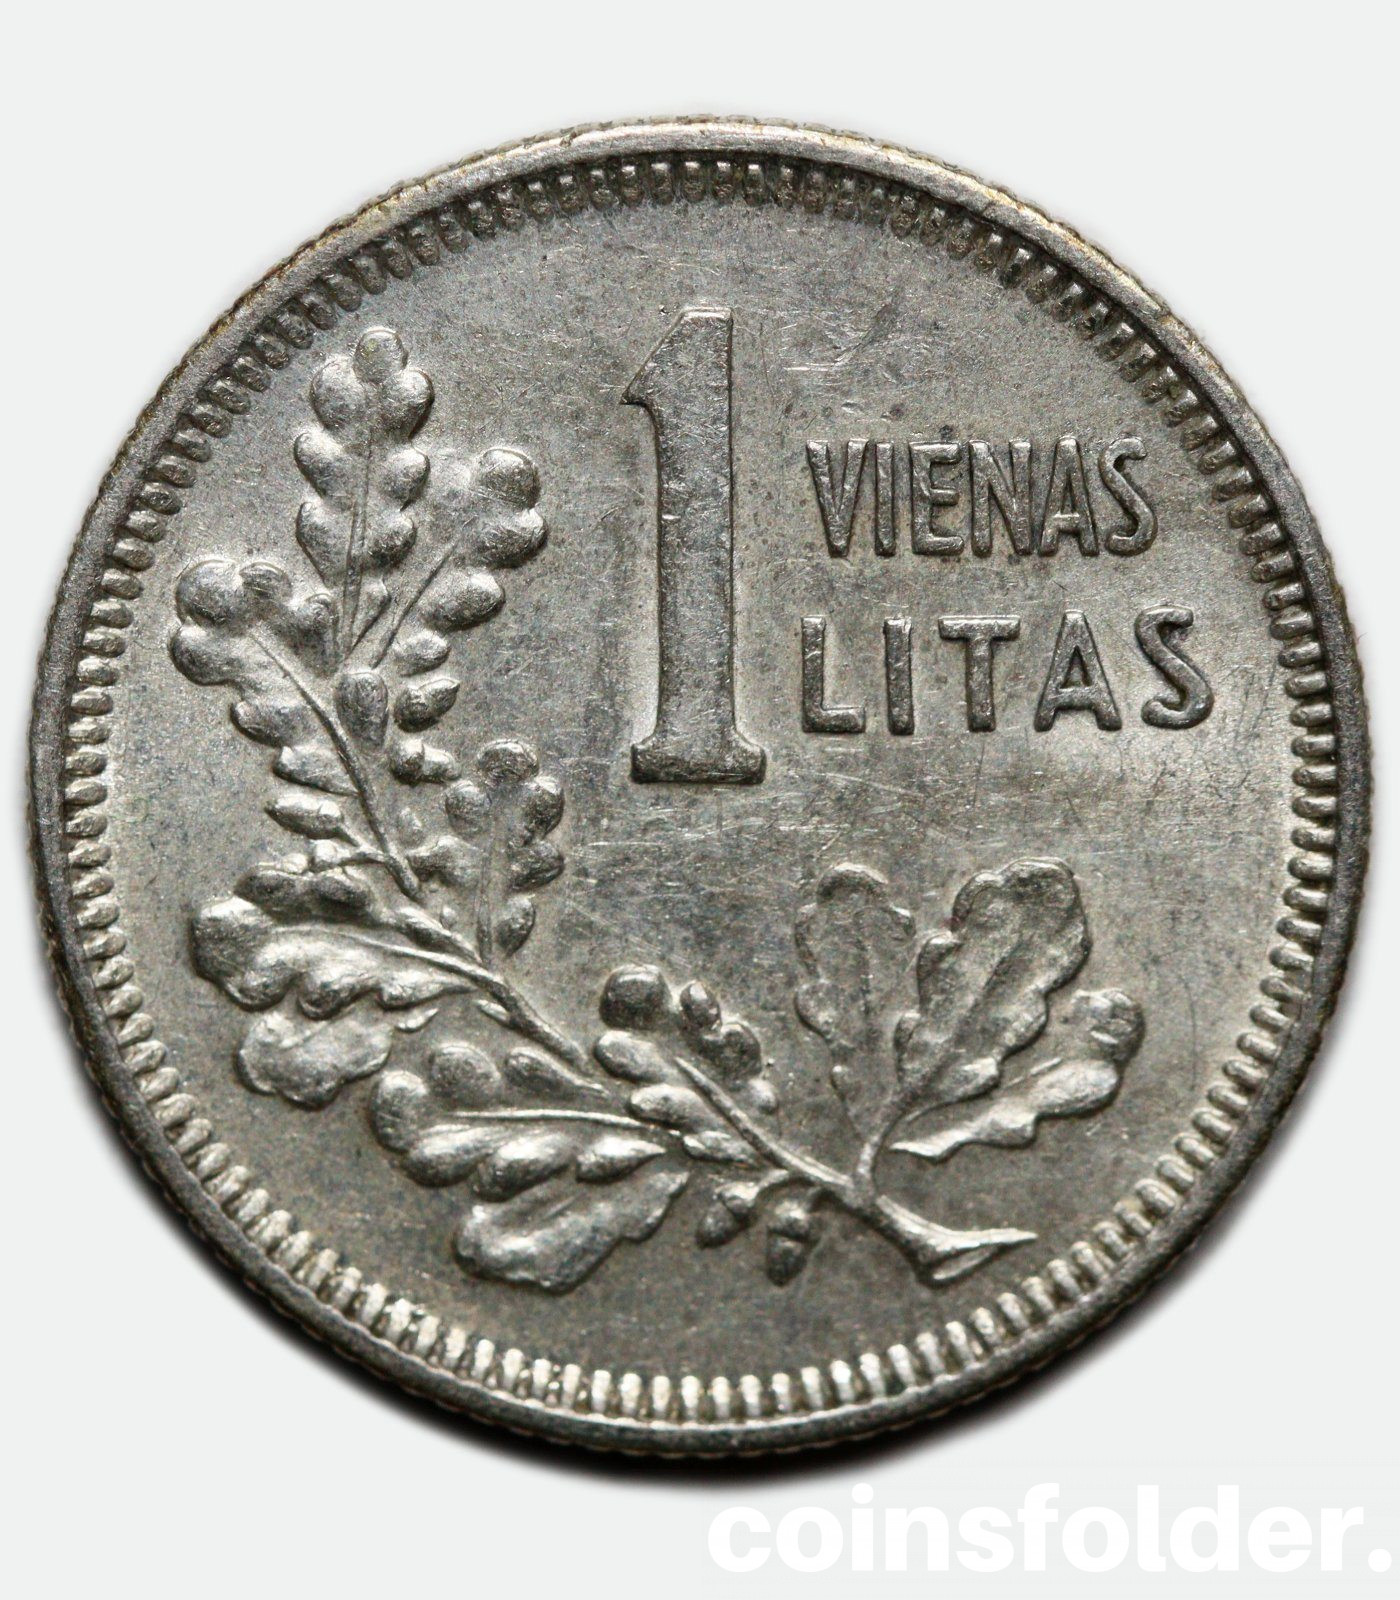 1 litas 1925, Lithuania